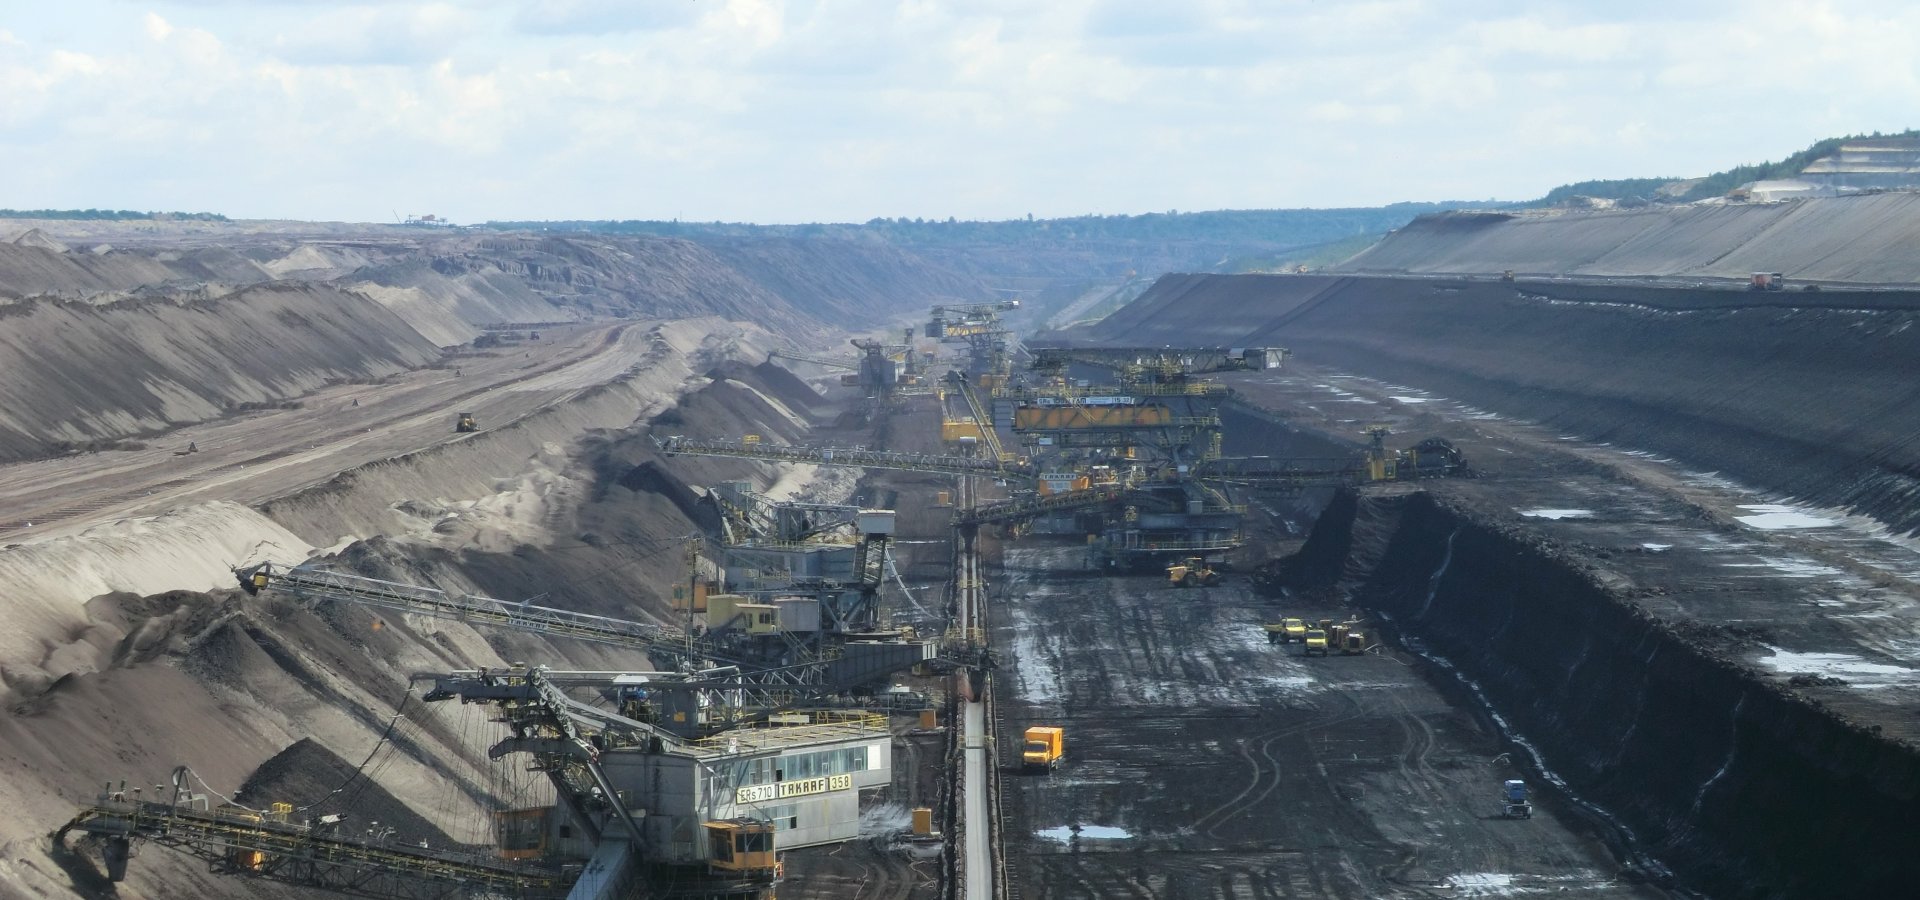 Germany closes last coal mine